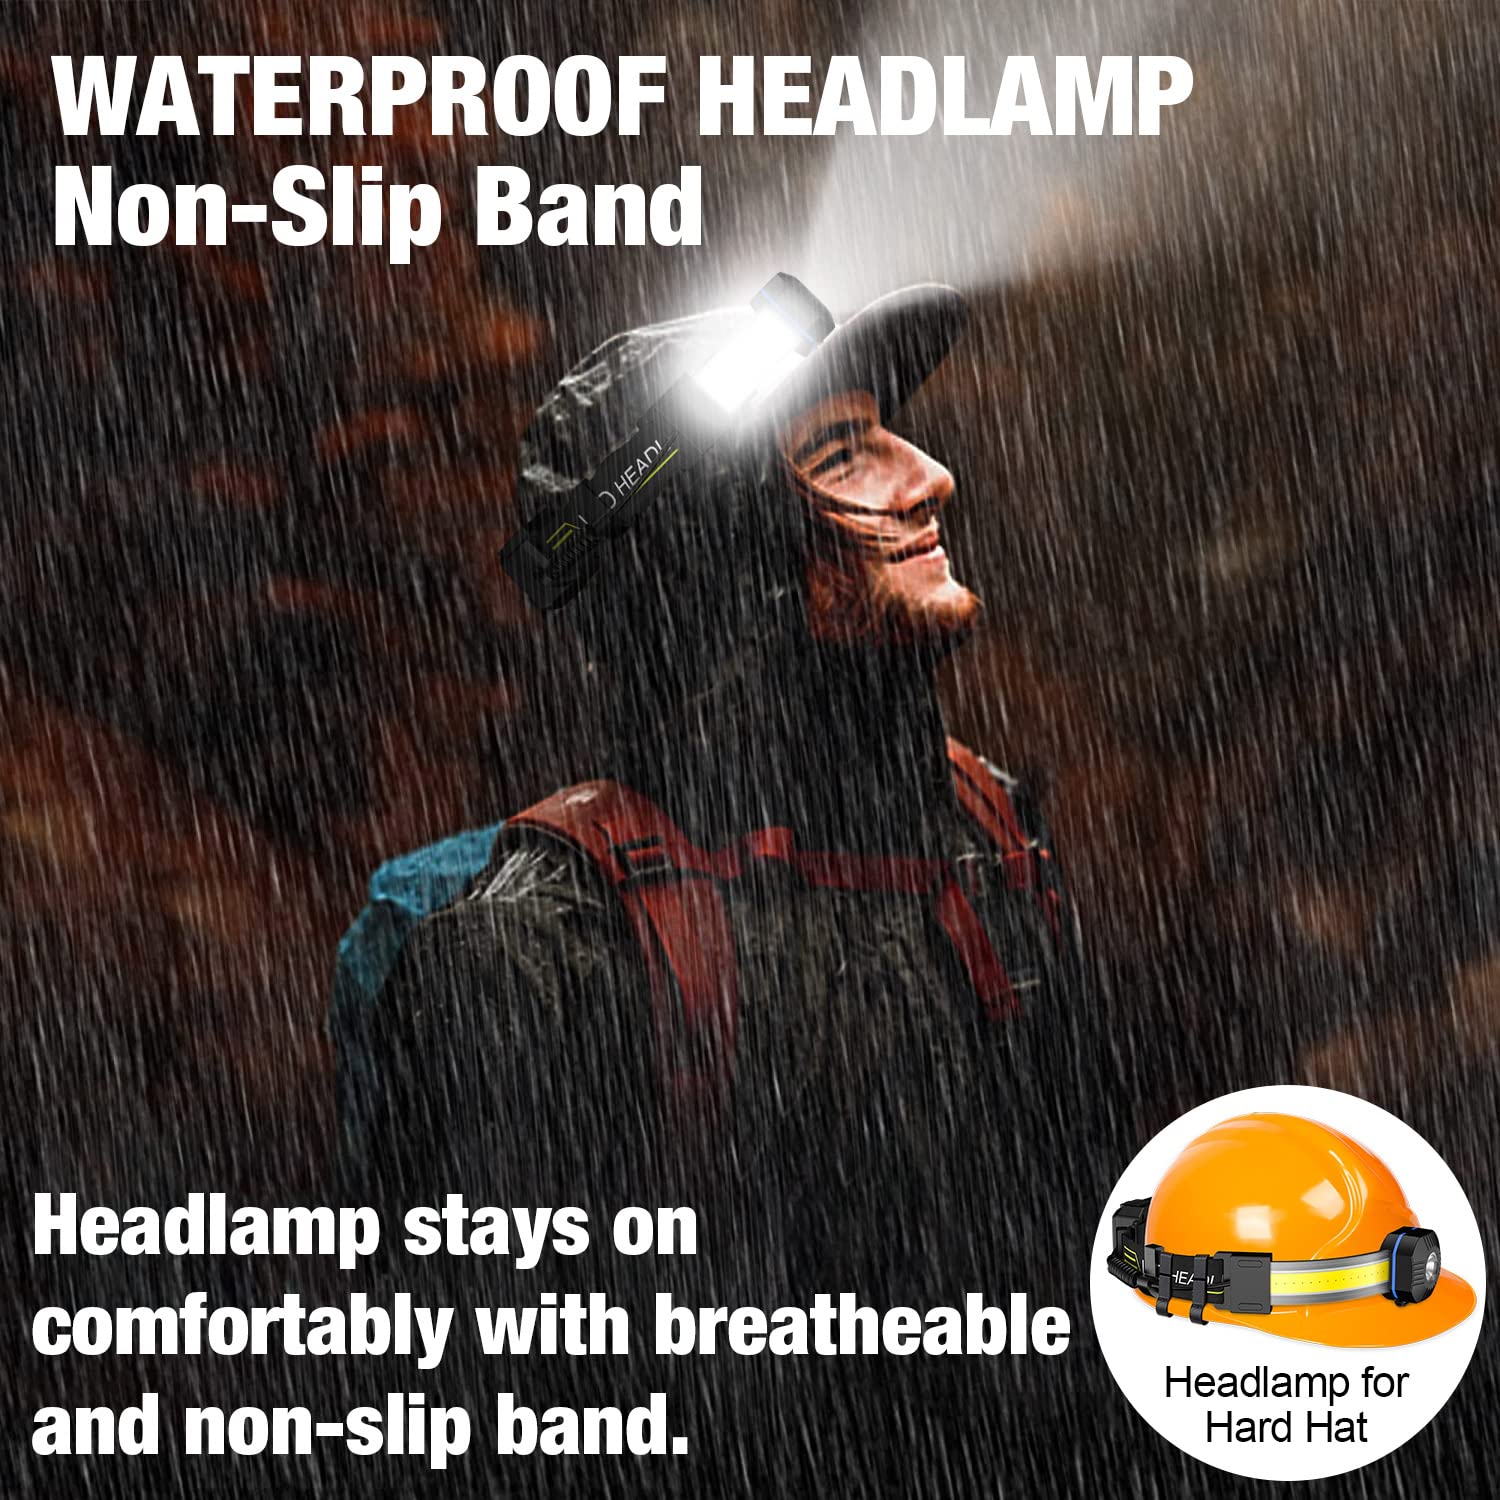 Spriak LED Headlamp, 1000lumens 230° Widebeam Headlight, USB Rechargeable HeadLamp with Red Taillight, Lightweight Waterproof Headband Light for Camping Running Hiking, Hard Hat Headlamp